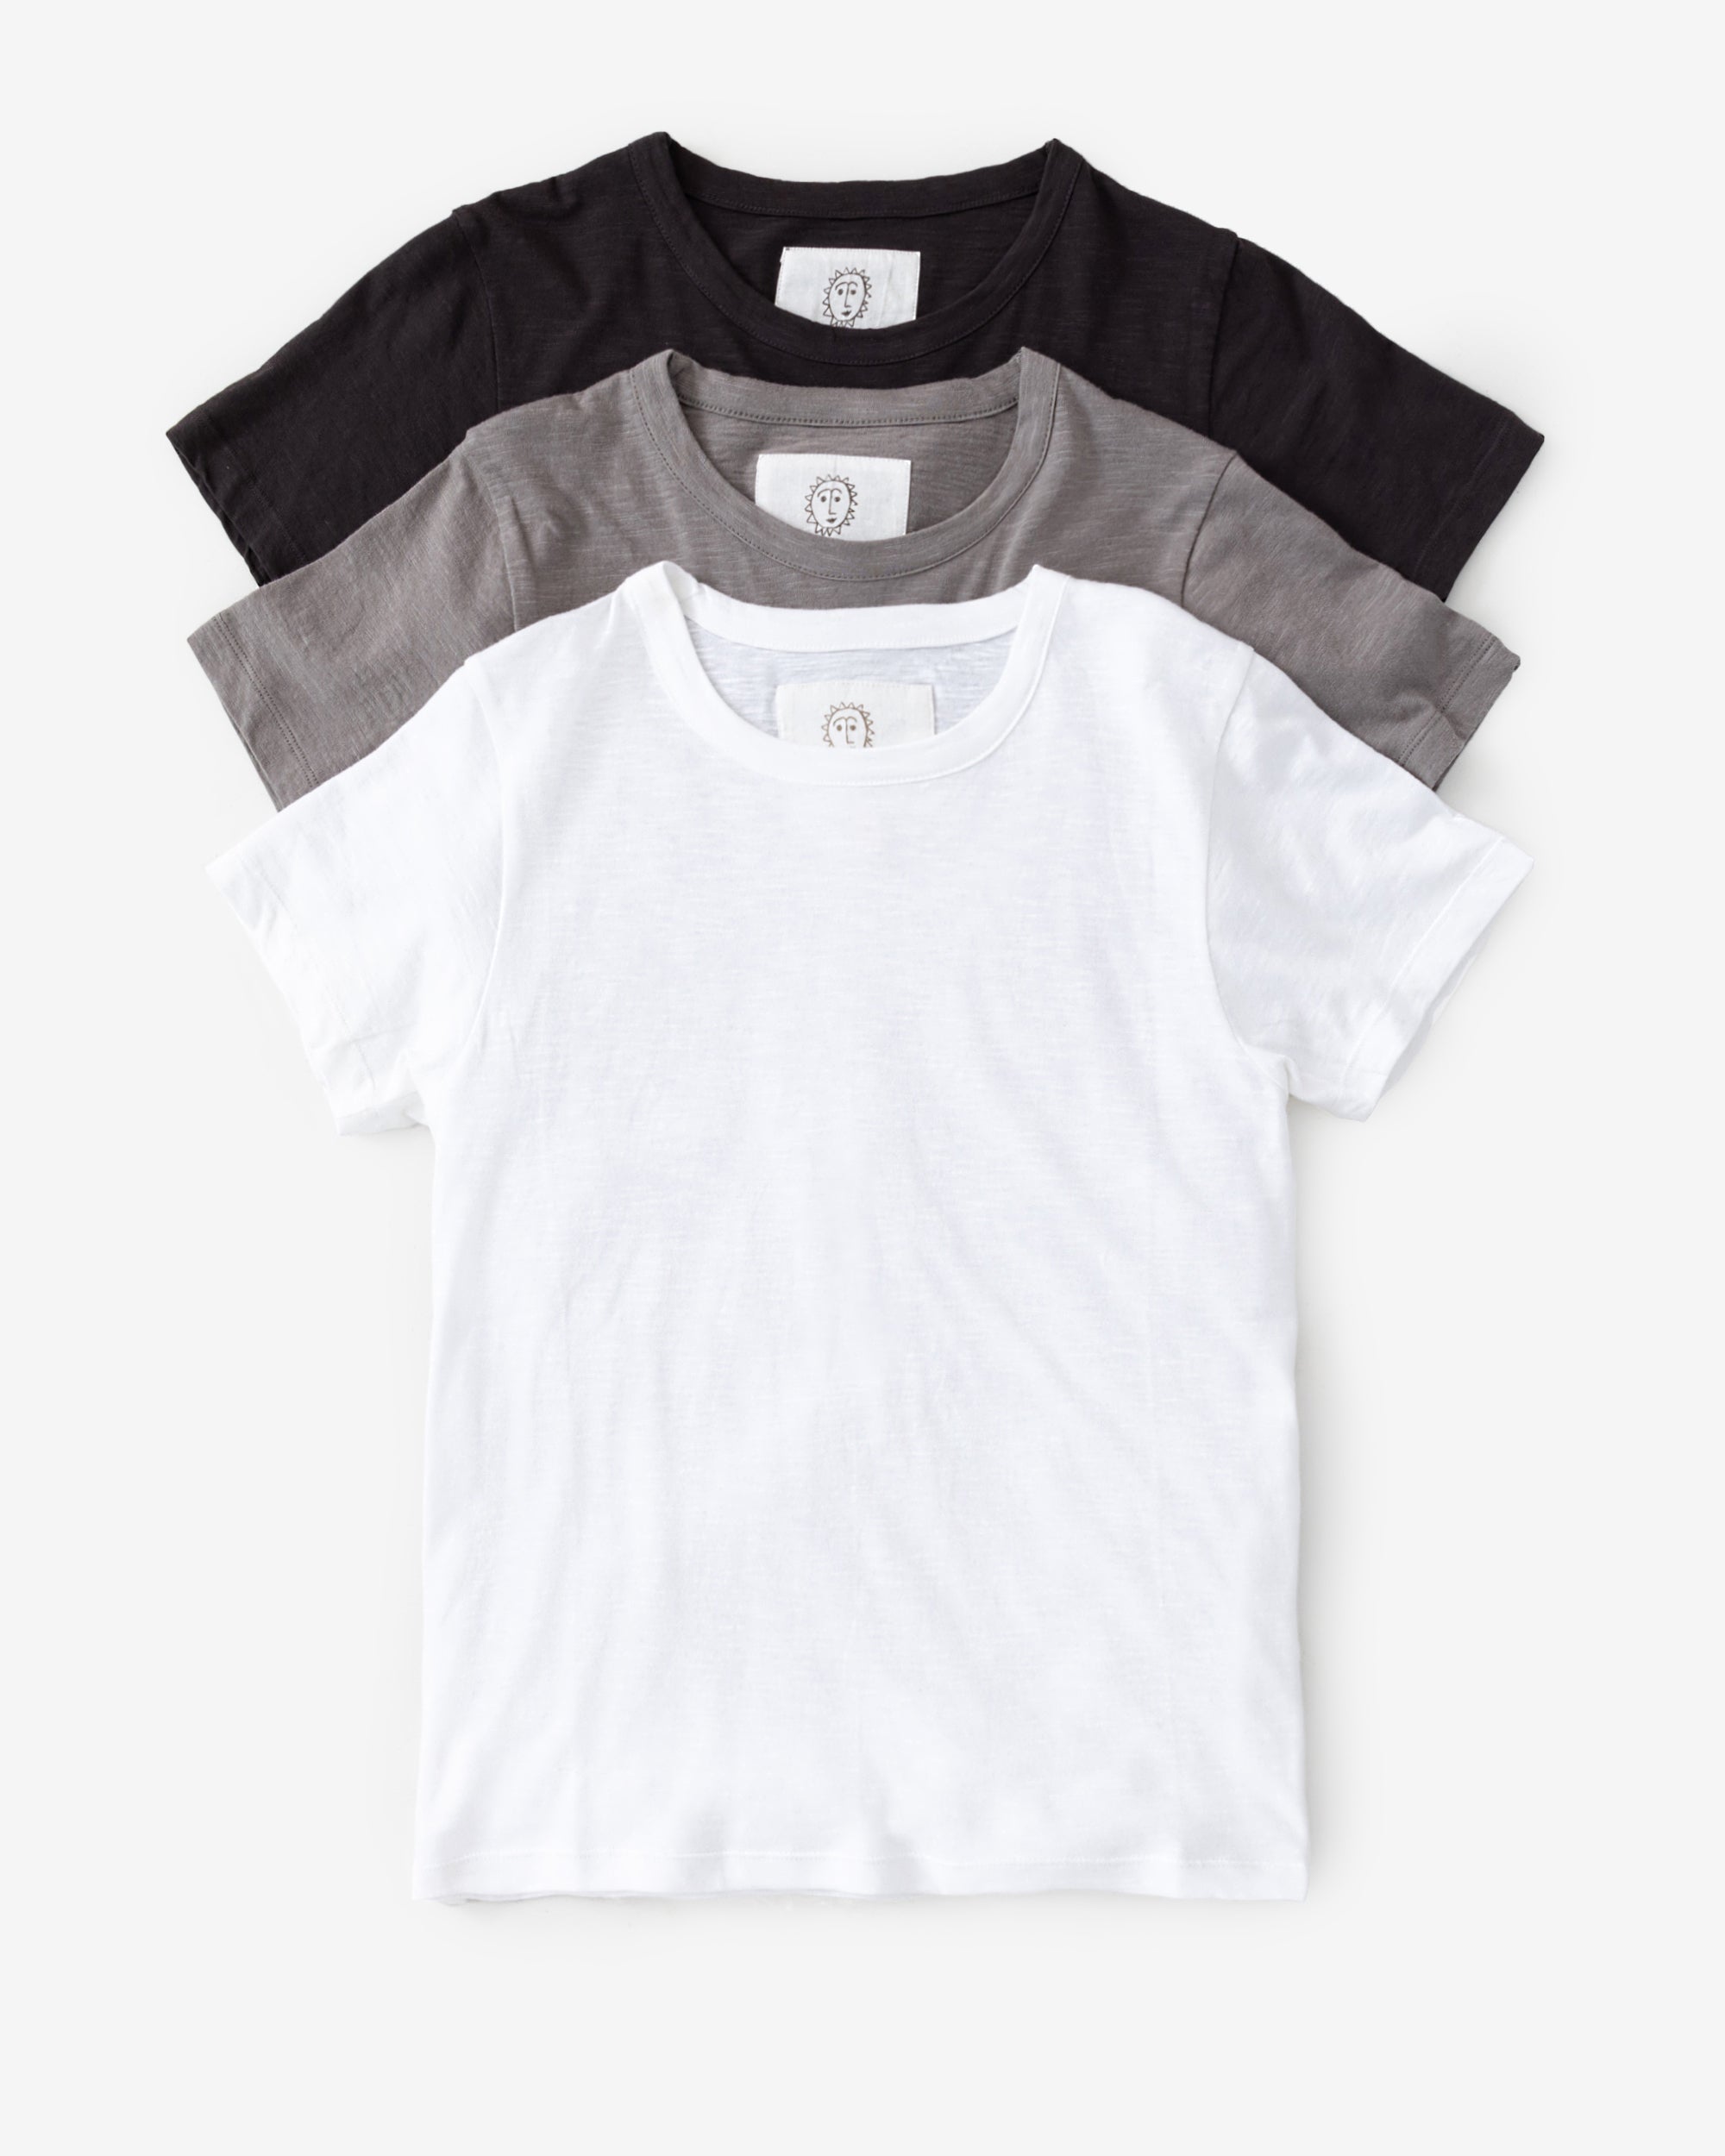 Saturday Tee - Knit T-Shirt 3-Pack - Black/Cloud/Pebble - Printfresh